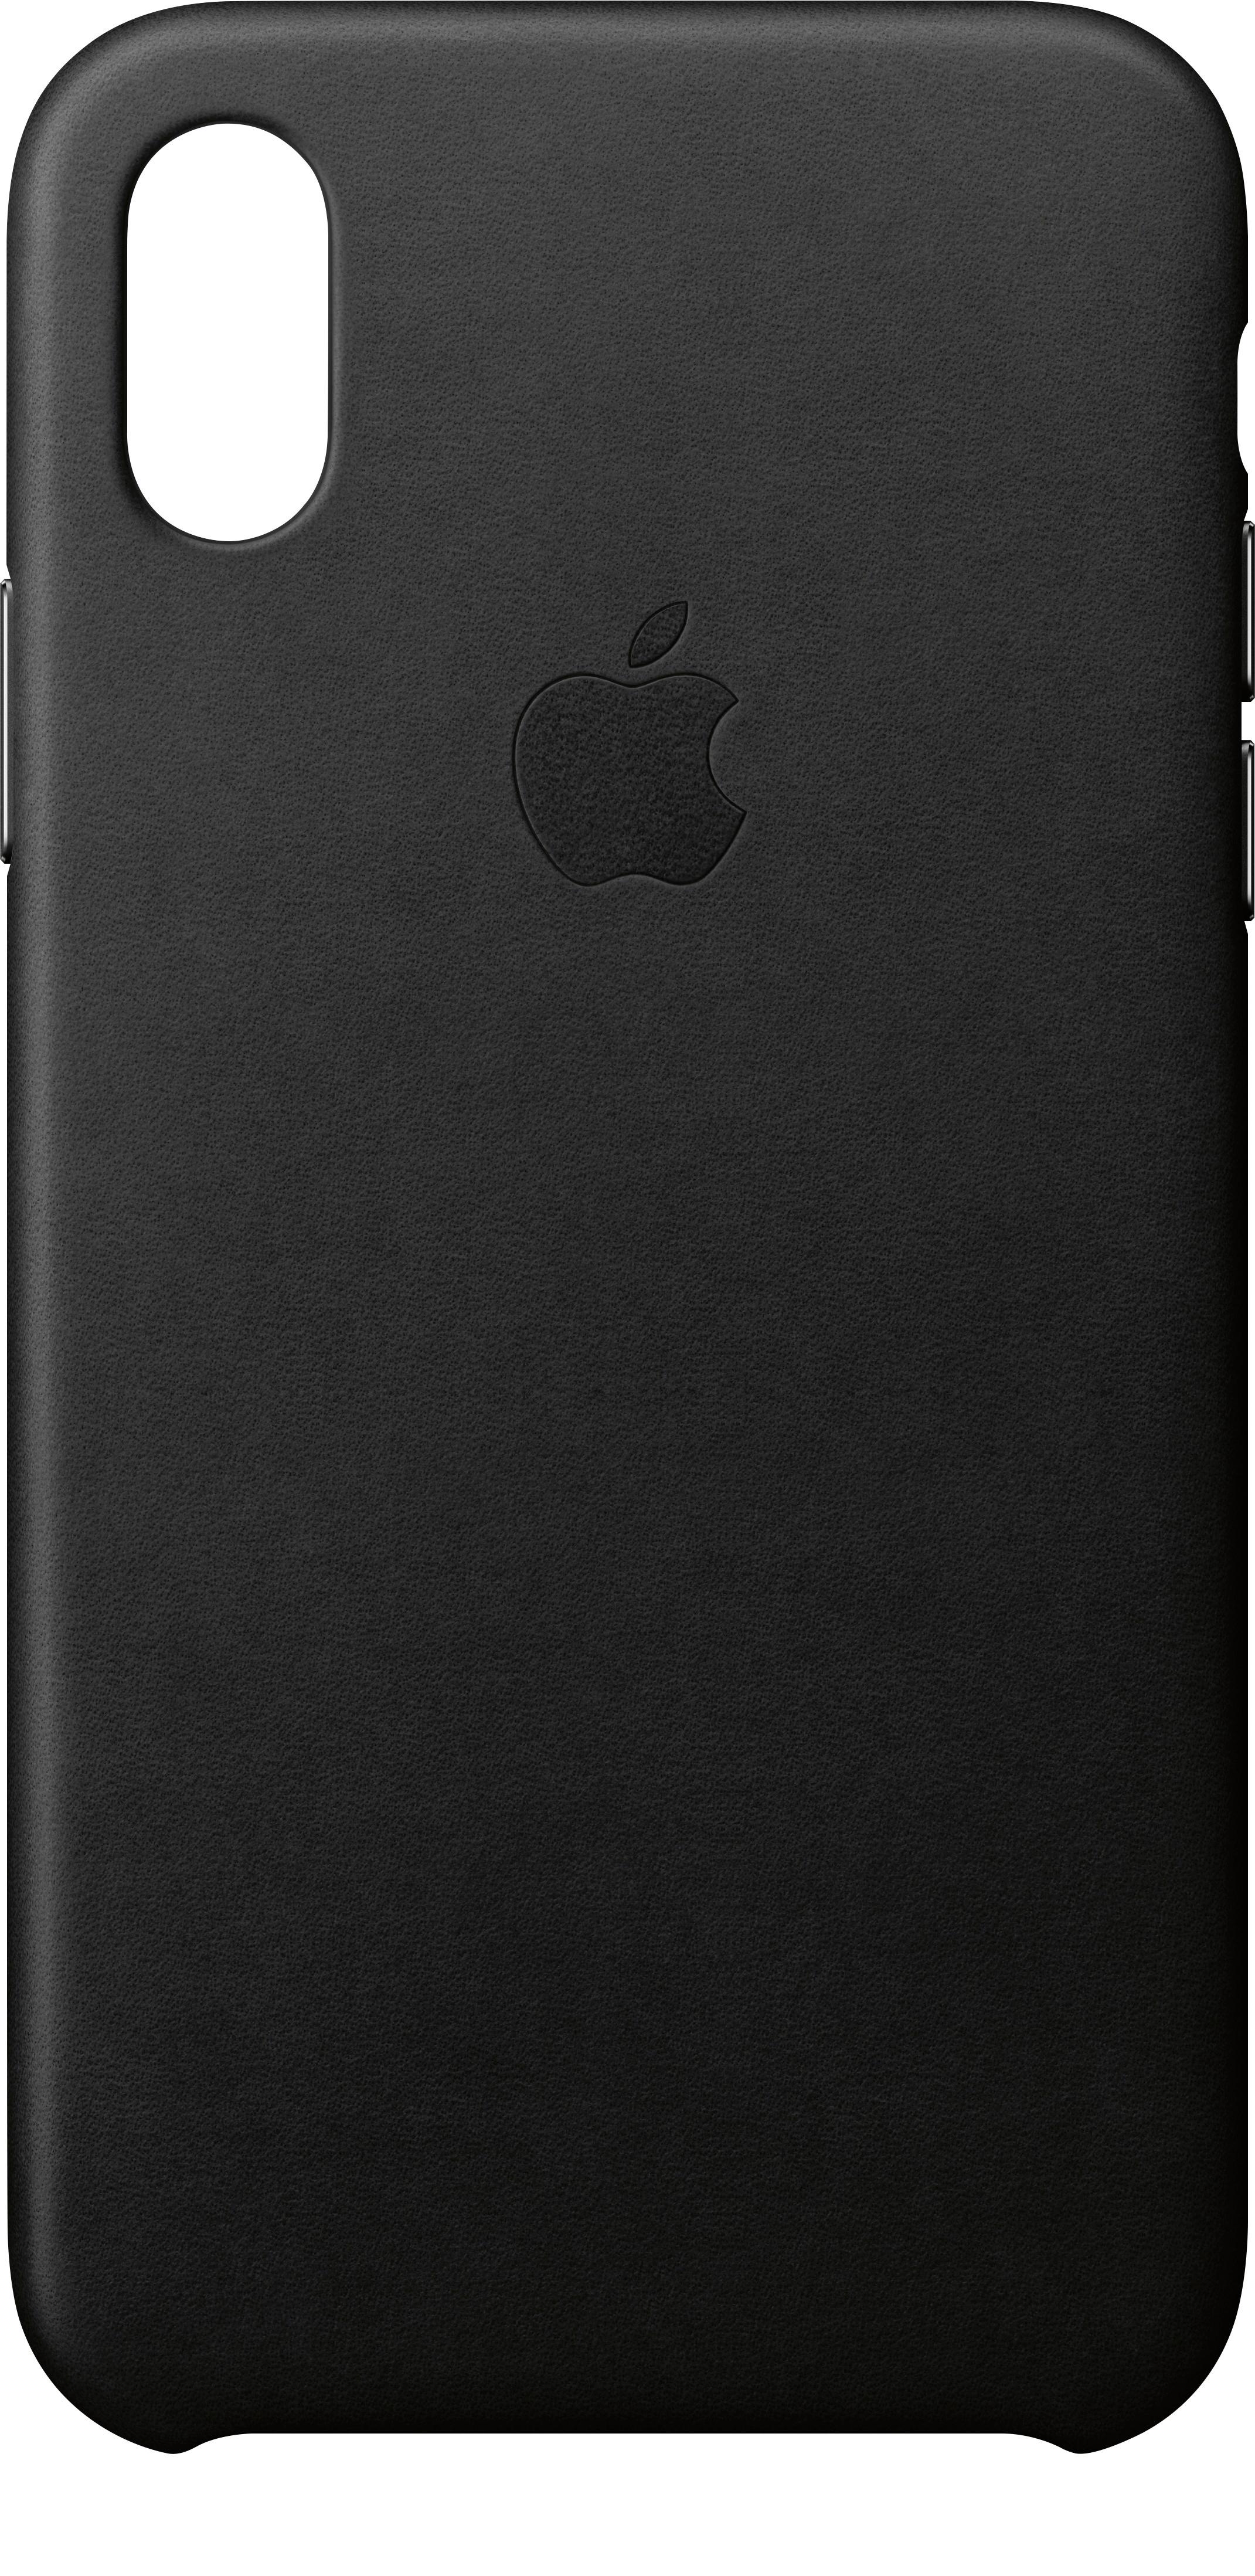 Apple - iPhone® X Leather Case - Black